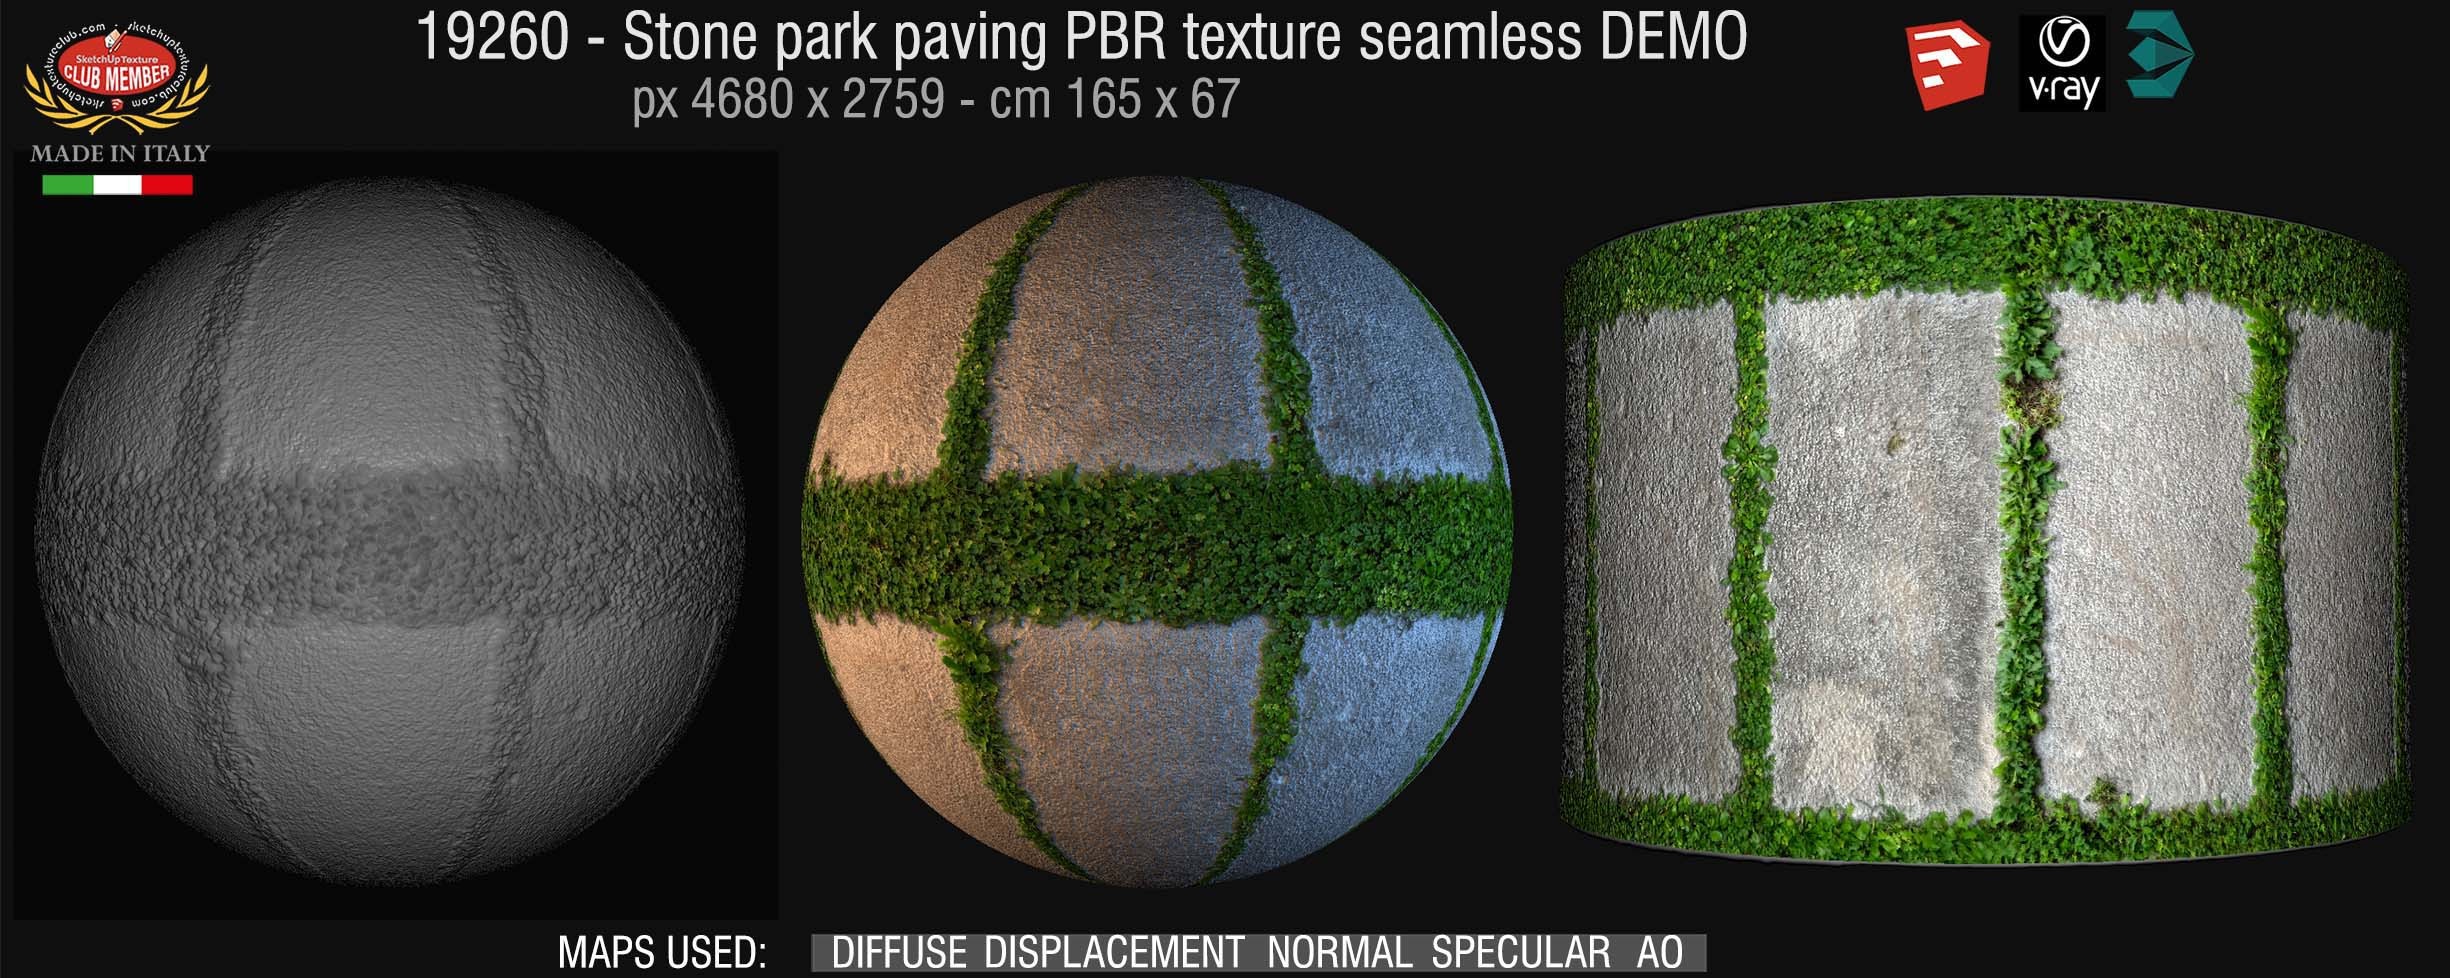 19260 Stone park paving PBR texture seamless